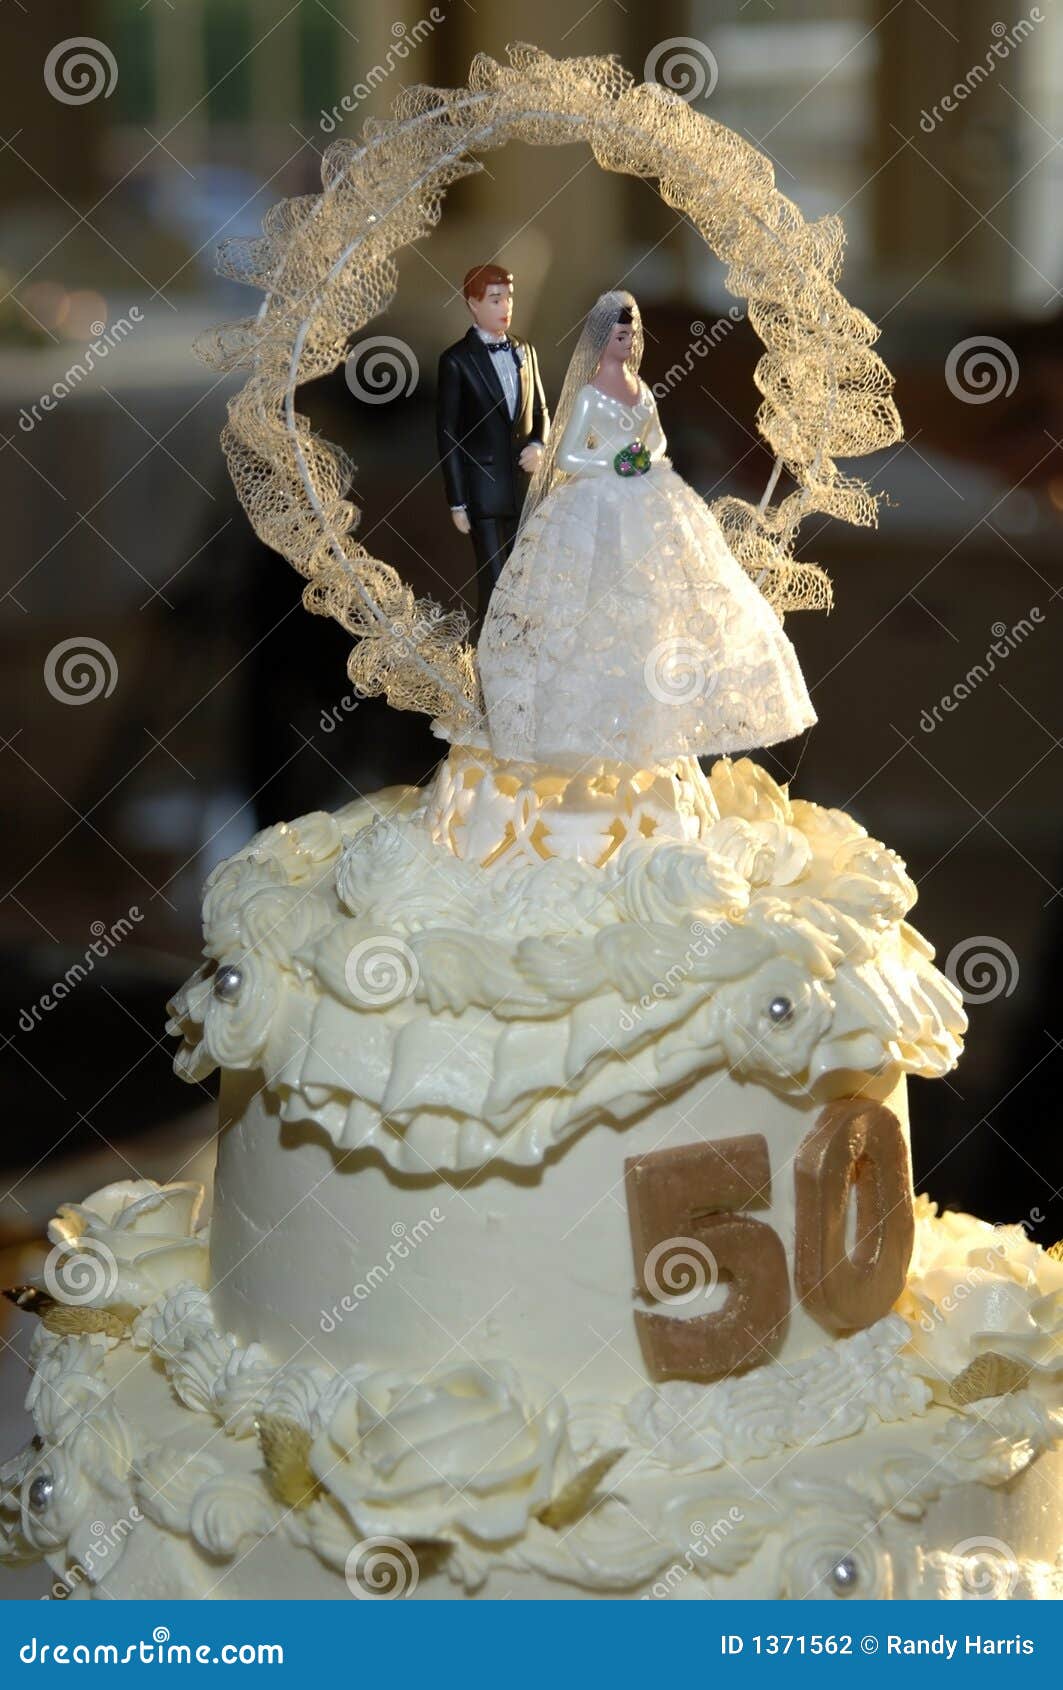 10th Wedding Anniversary Cake - Regency Cakes Online Shop